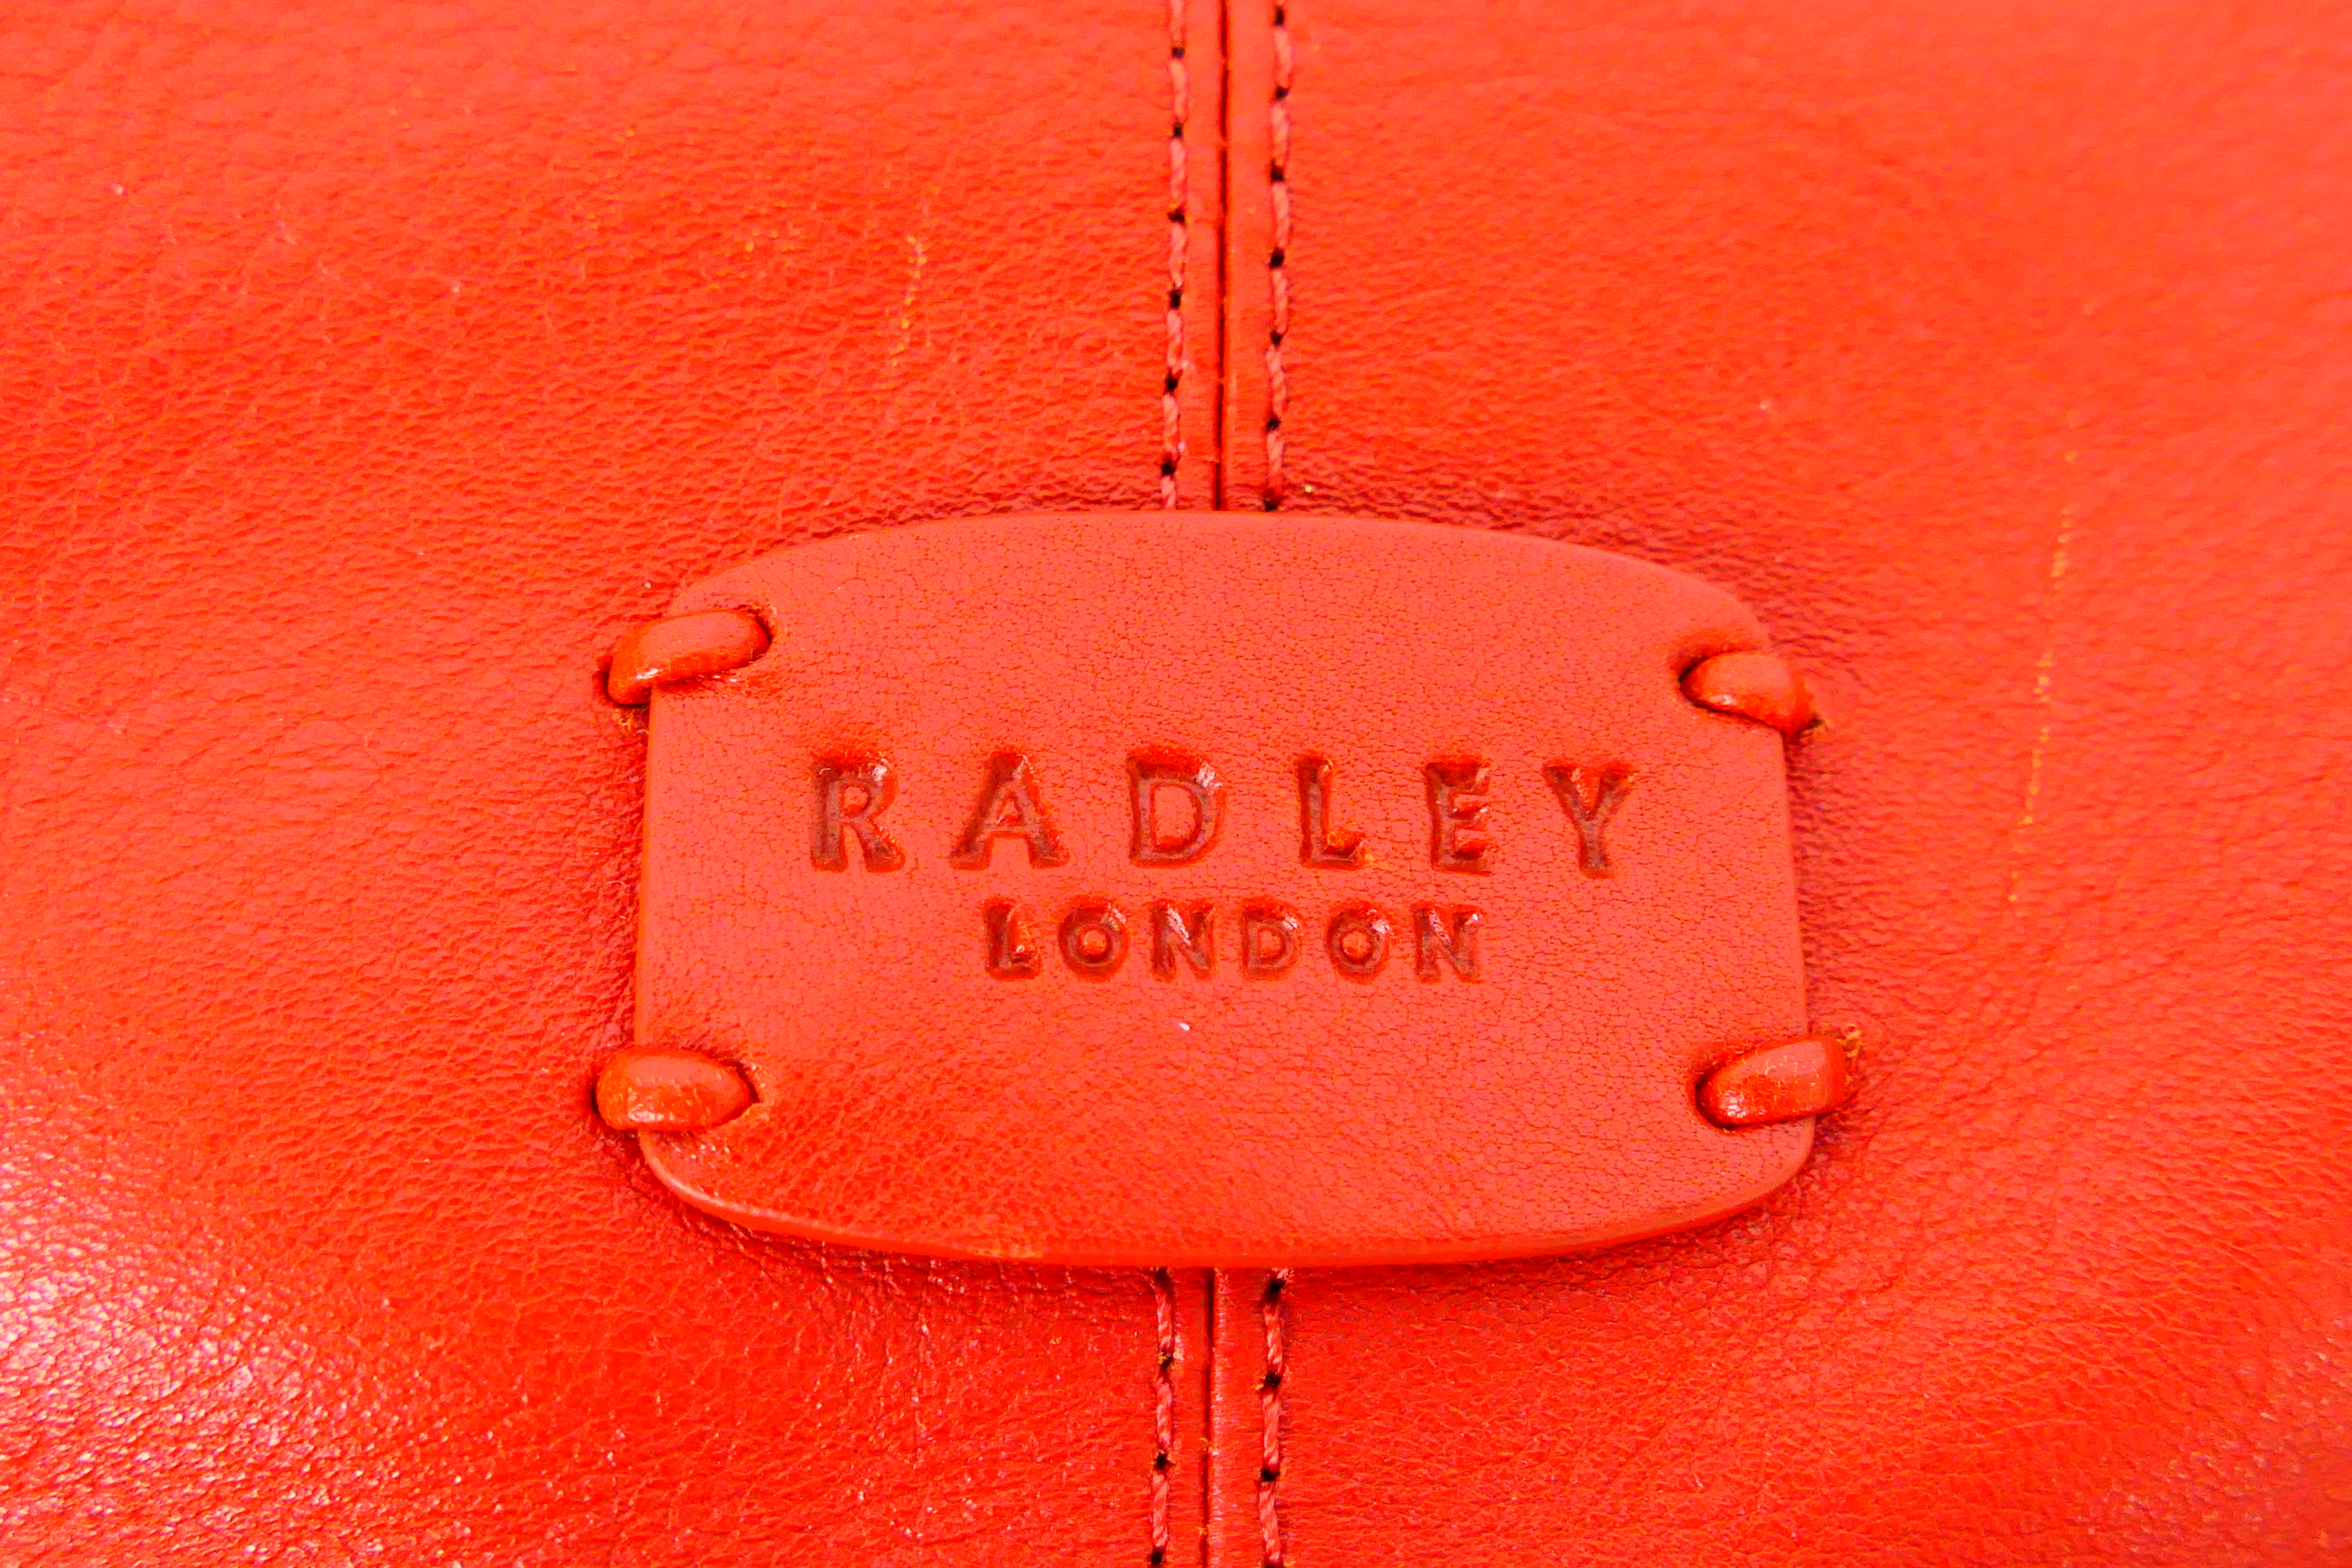 Radley - A limited edition Radley London orange leather handbag - Handbag has one interior zip - Image 3 of 7